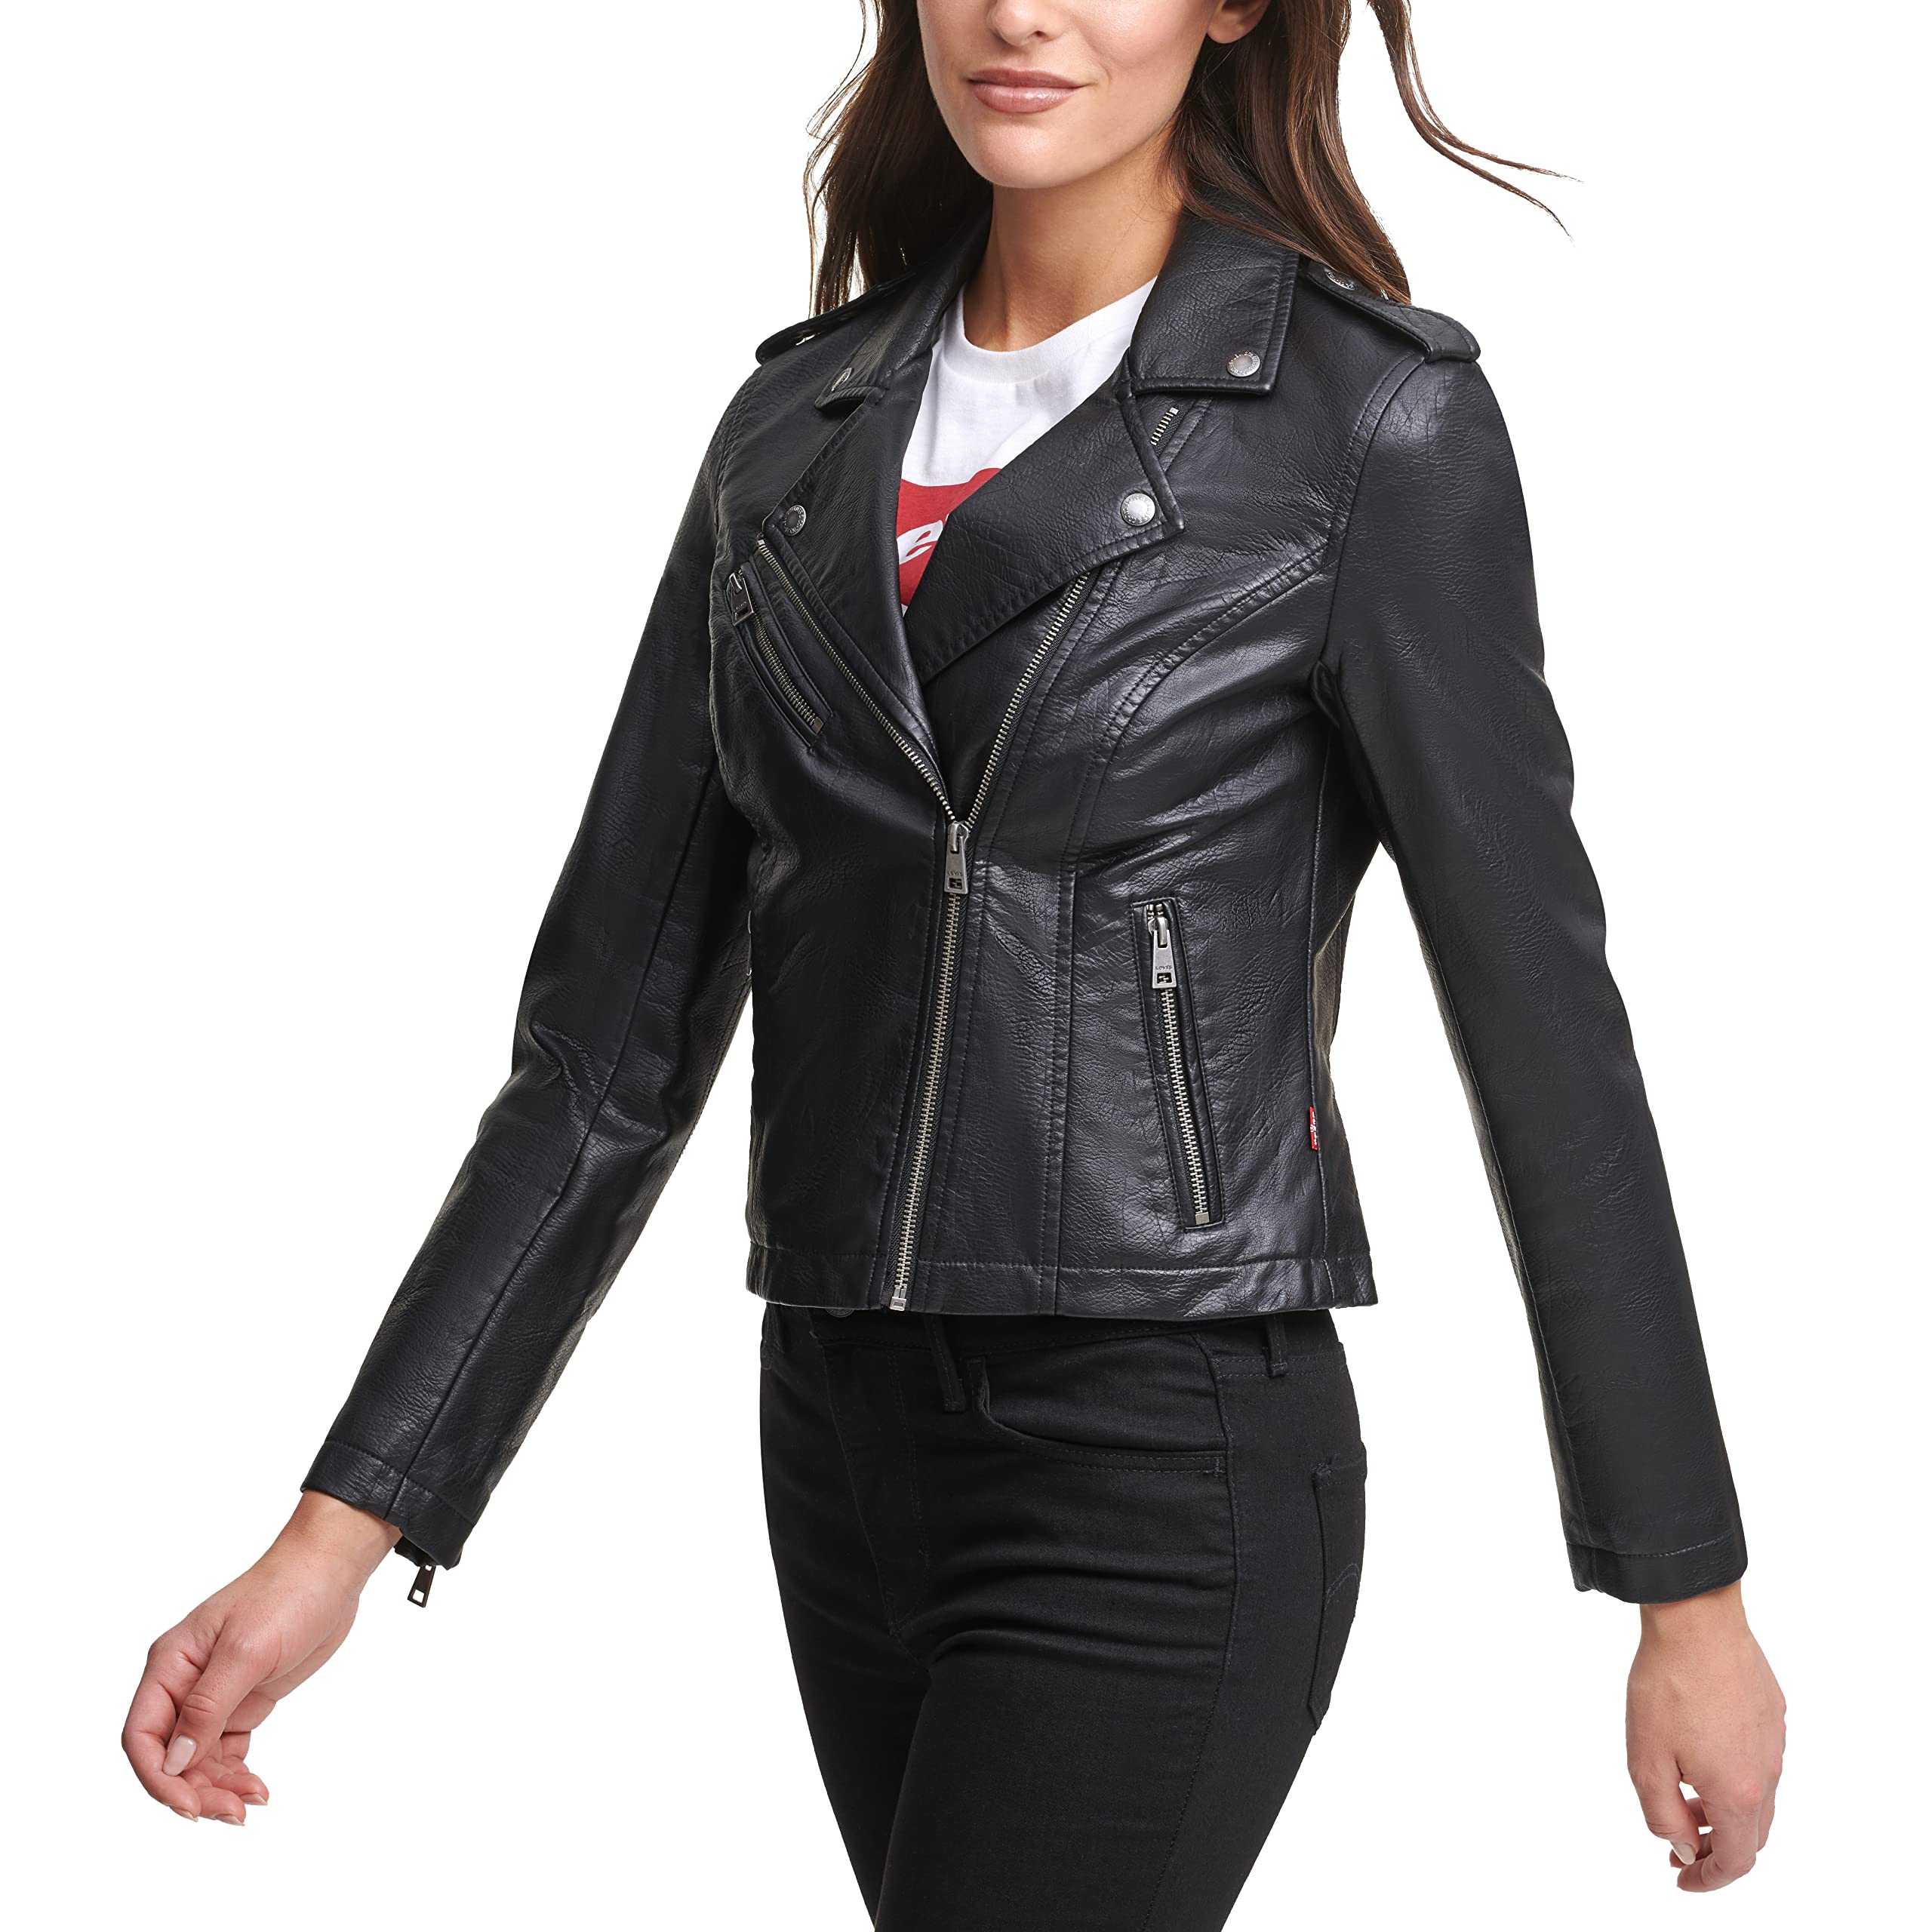 Levi's Women's Faux Leather Classic Asymmetrical Motorcycle Jacket (Standard & Plus Sizes)